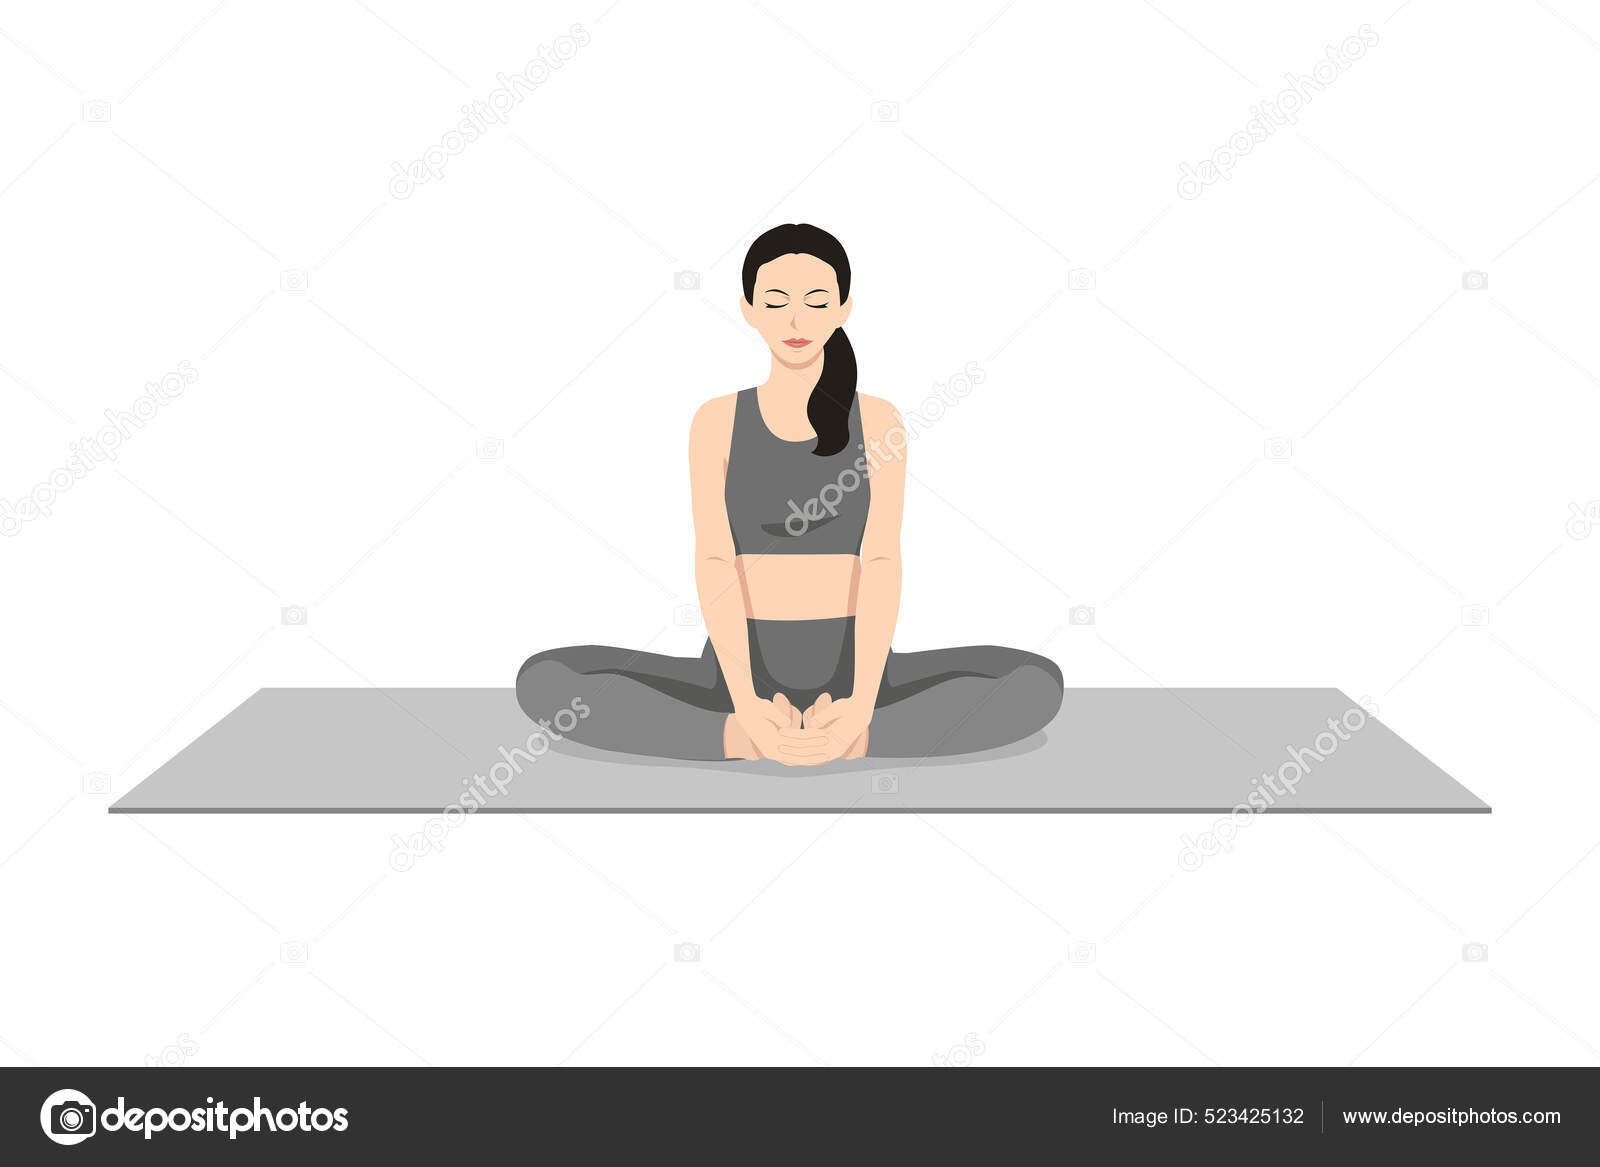 Premium Photo | Butterfly pose yoga posture asana